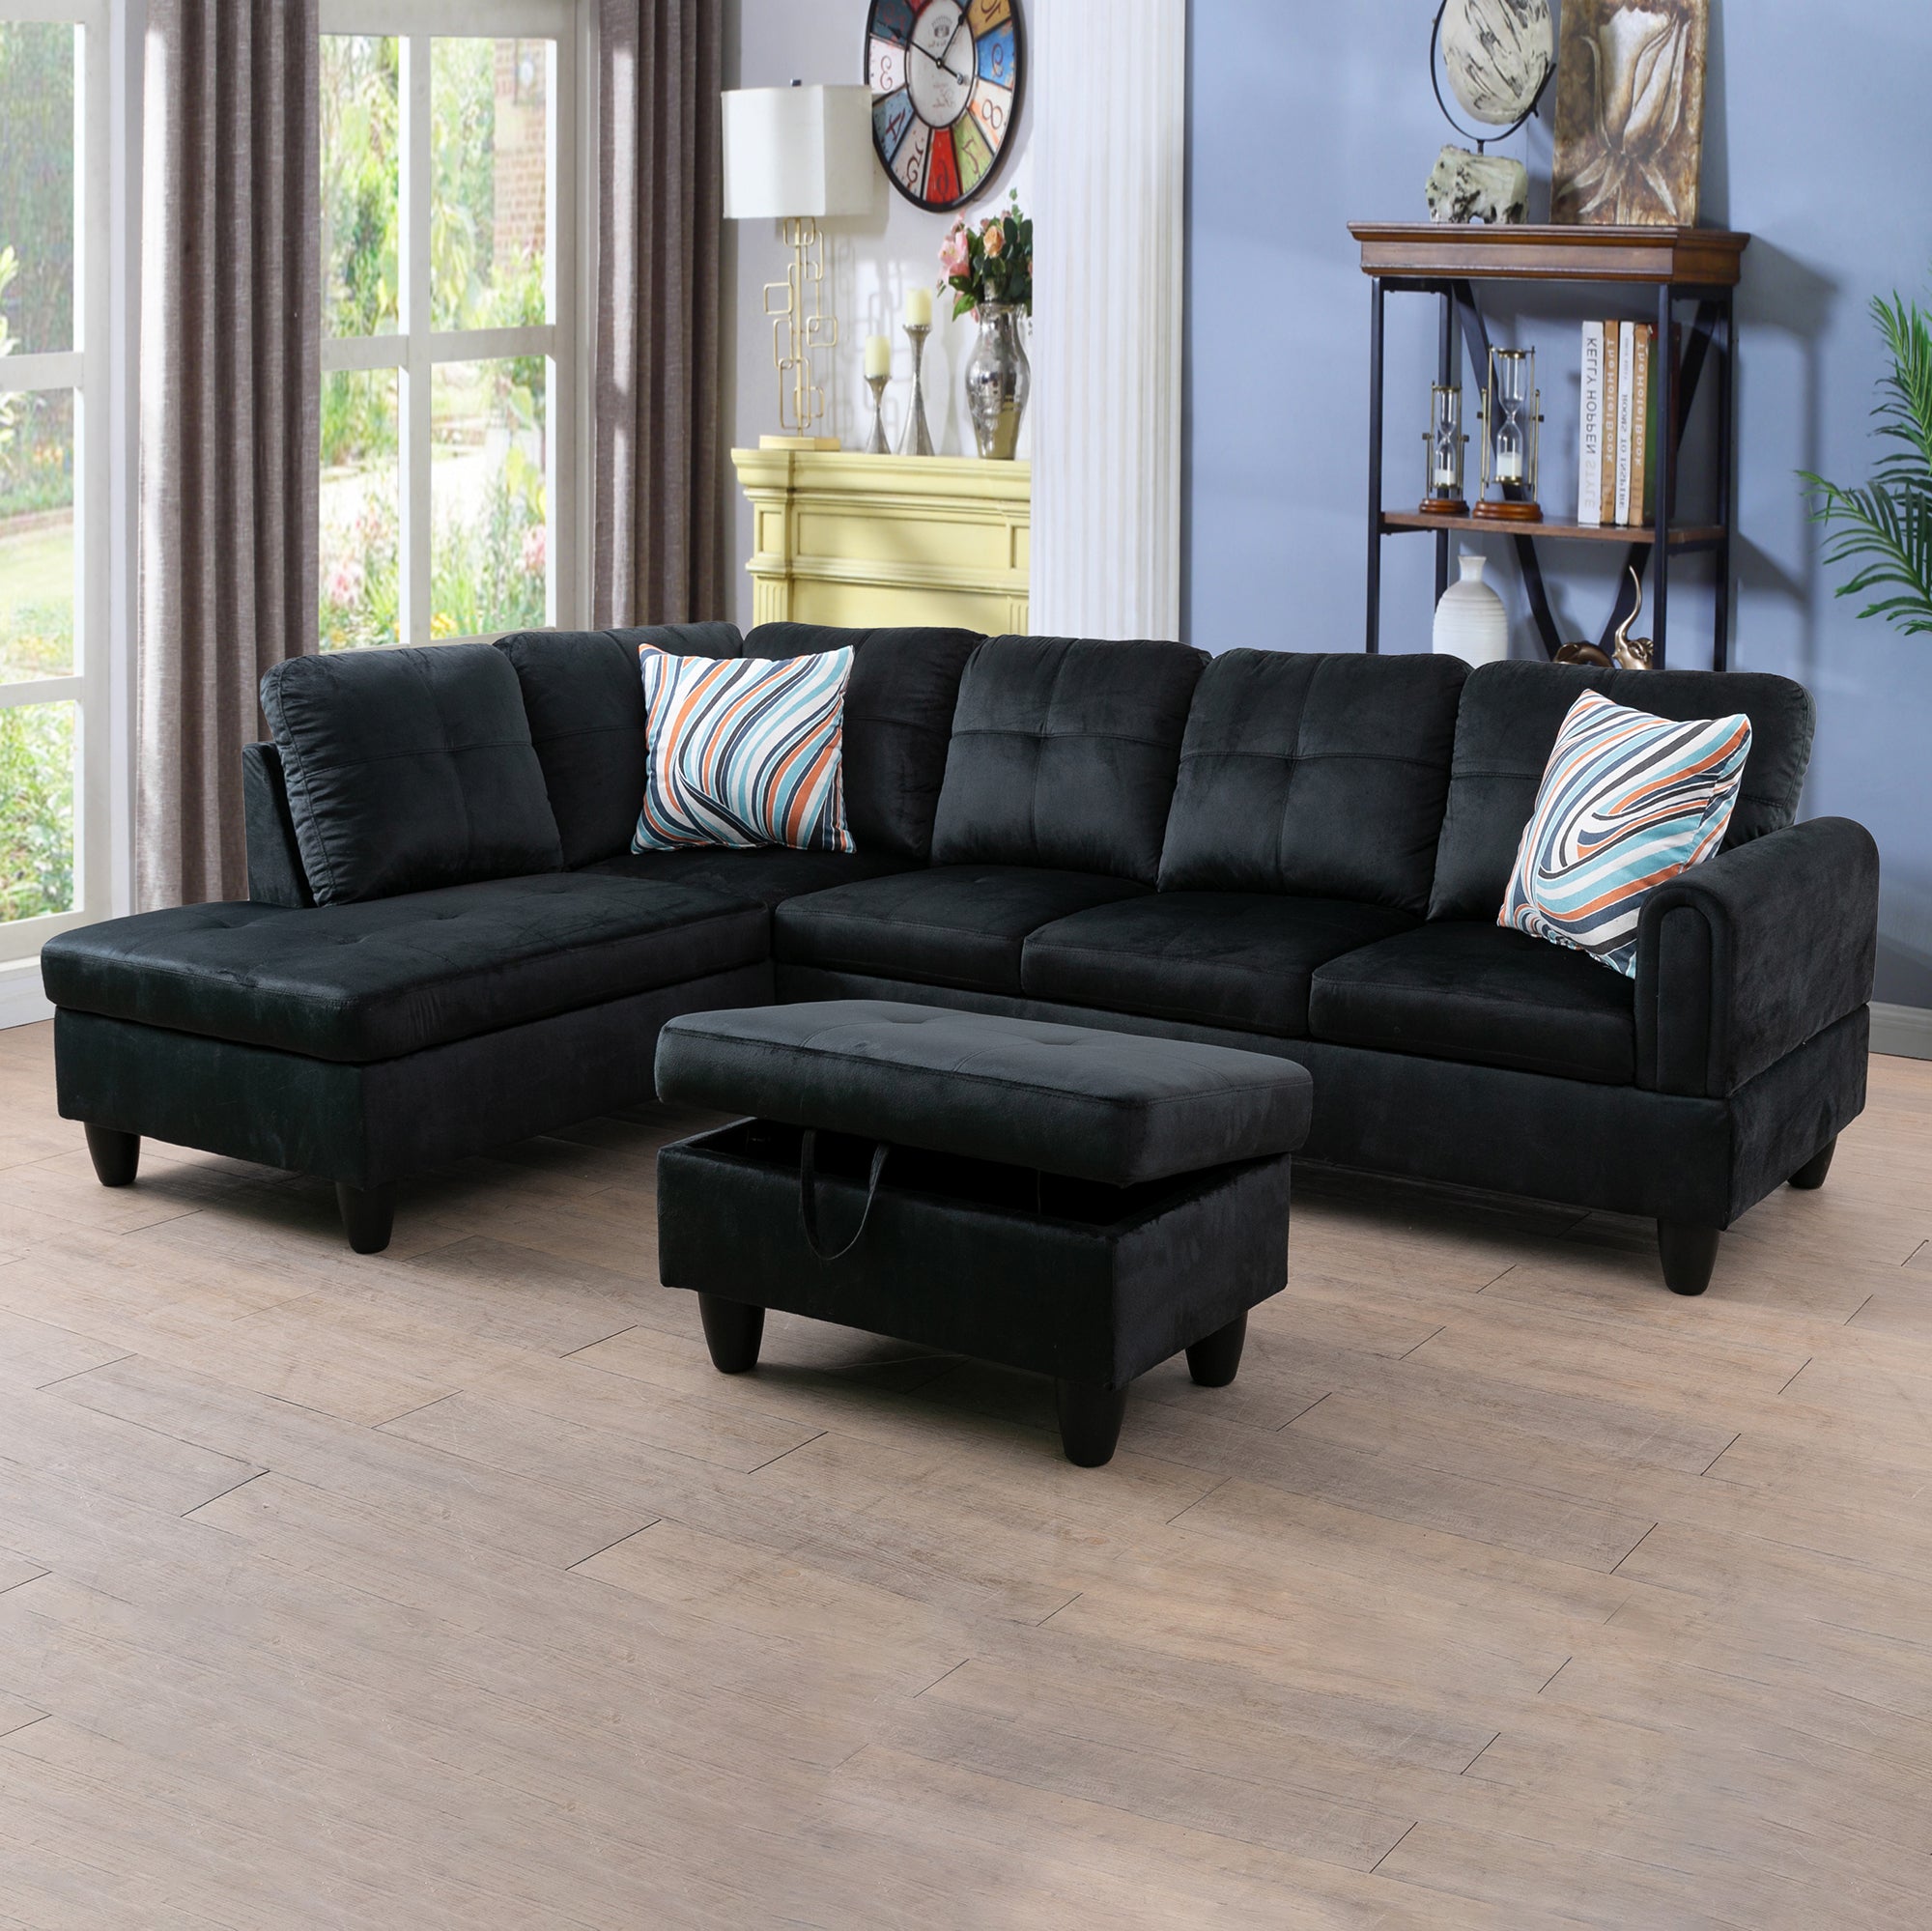 Ainehome Black L-shaped Flannel Sofa Set